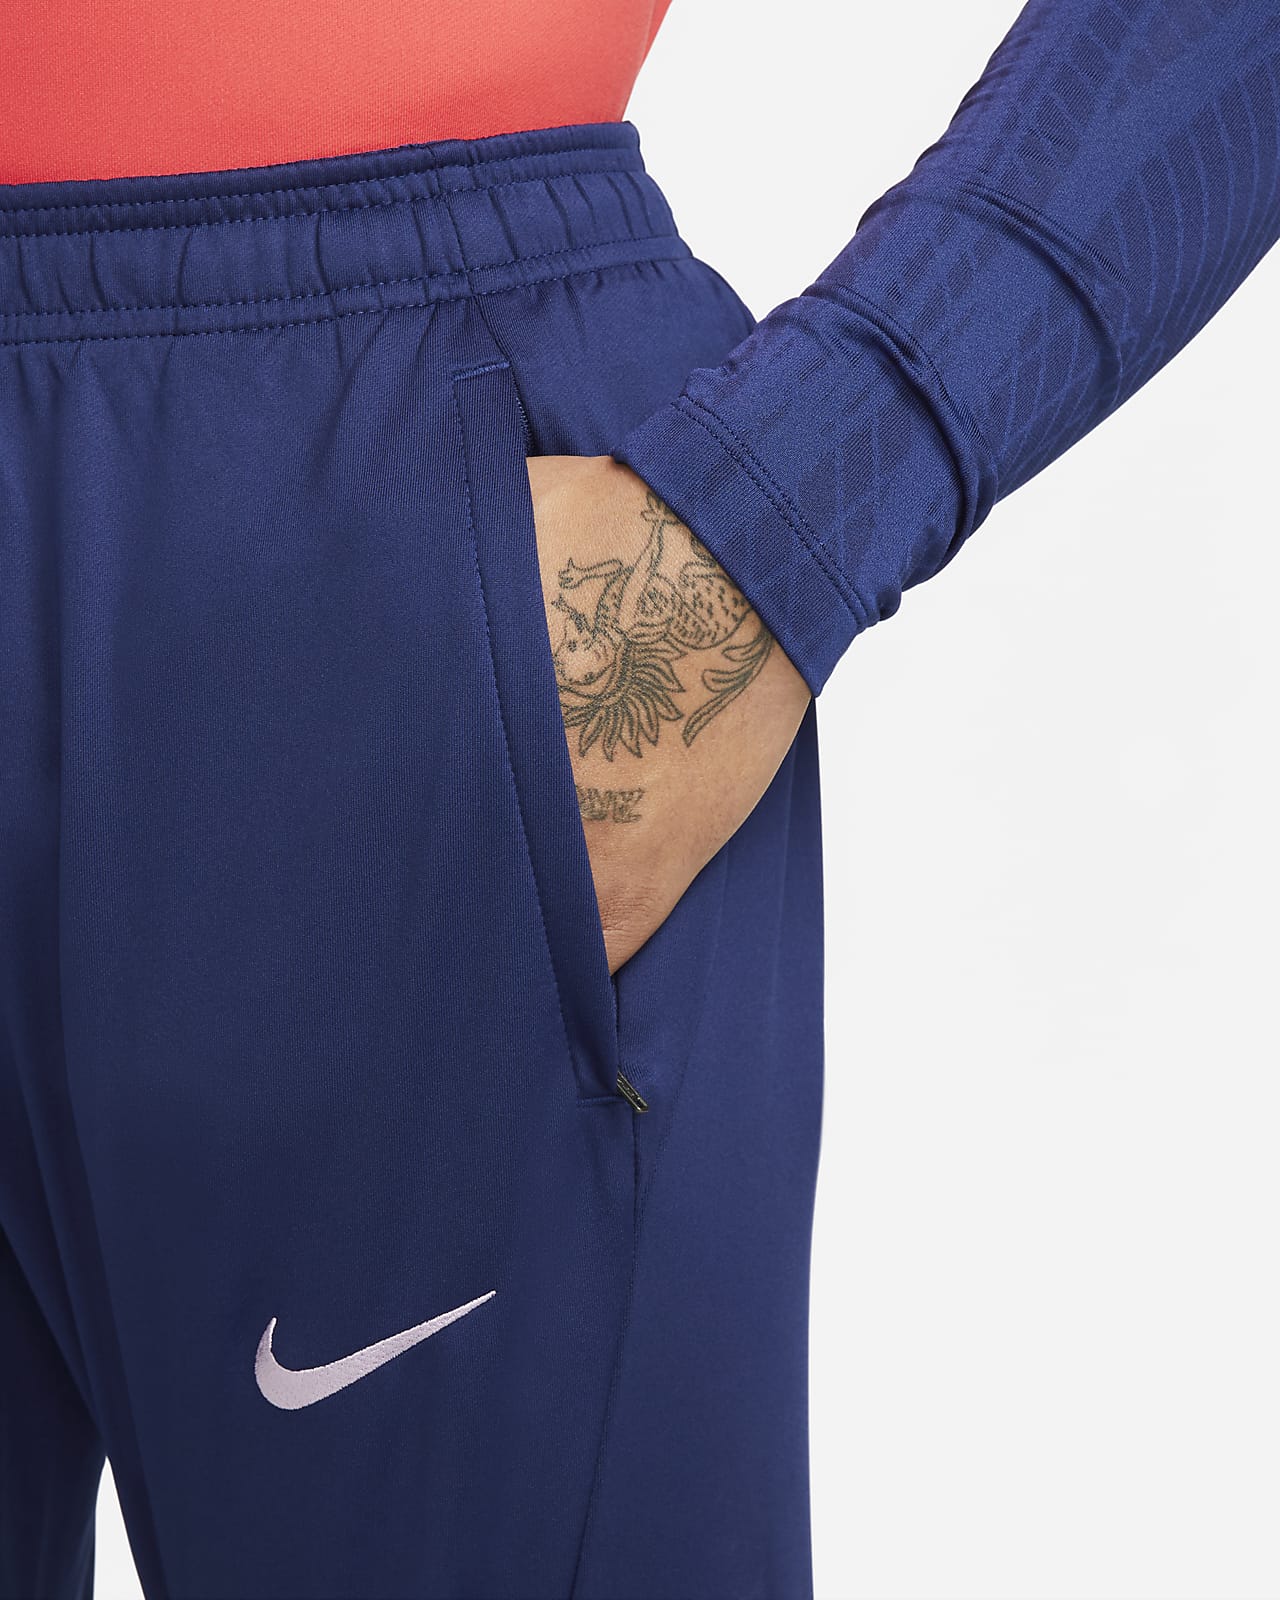 cliente ballet Asesor Atlético Madrid Strike Men's Nike Dri-FIT Knit Football Shorts. Nike LU